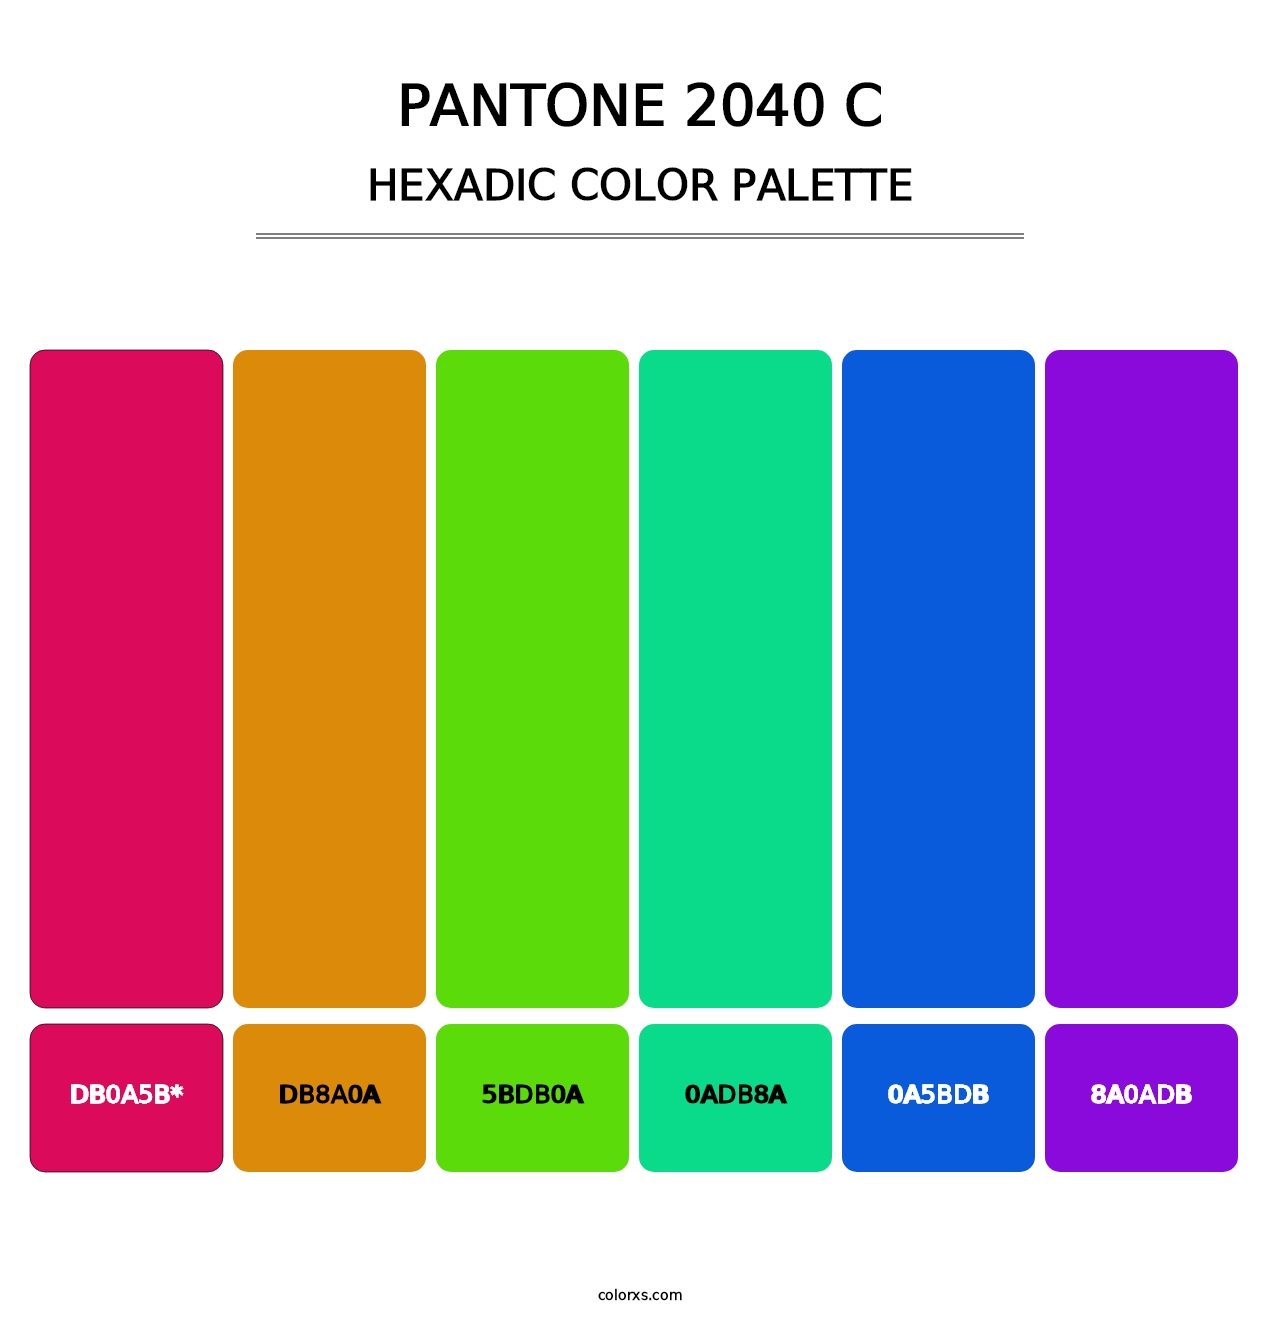 PANTONE 2040 C - Hexadic Color Palette